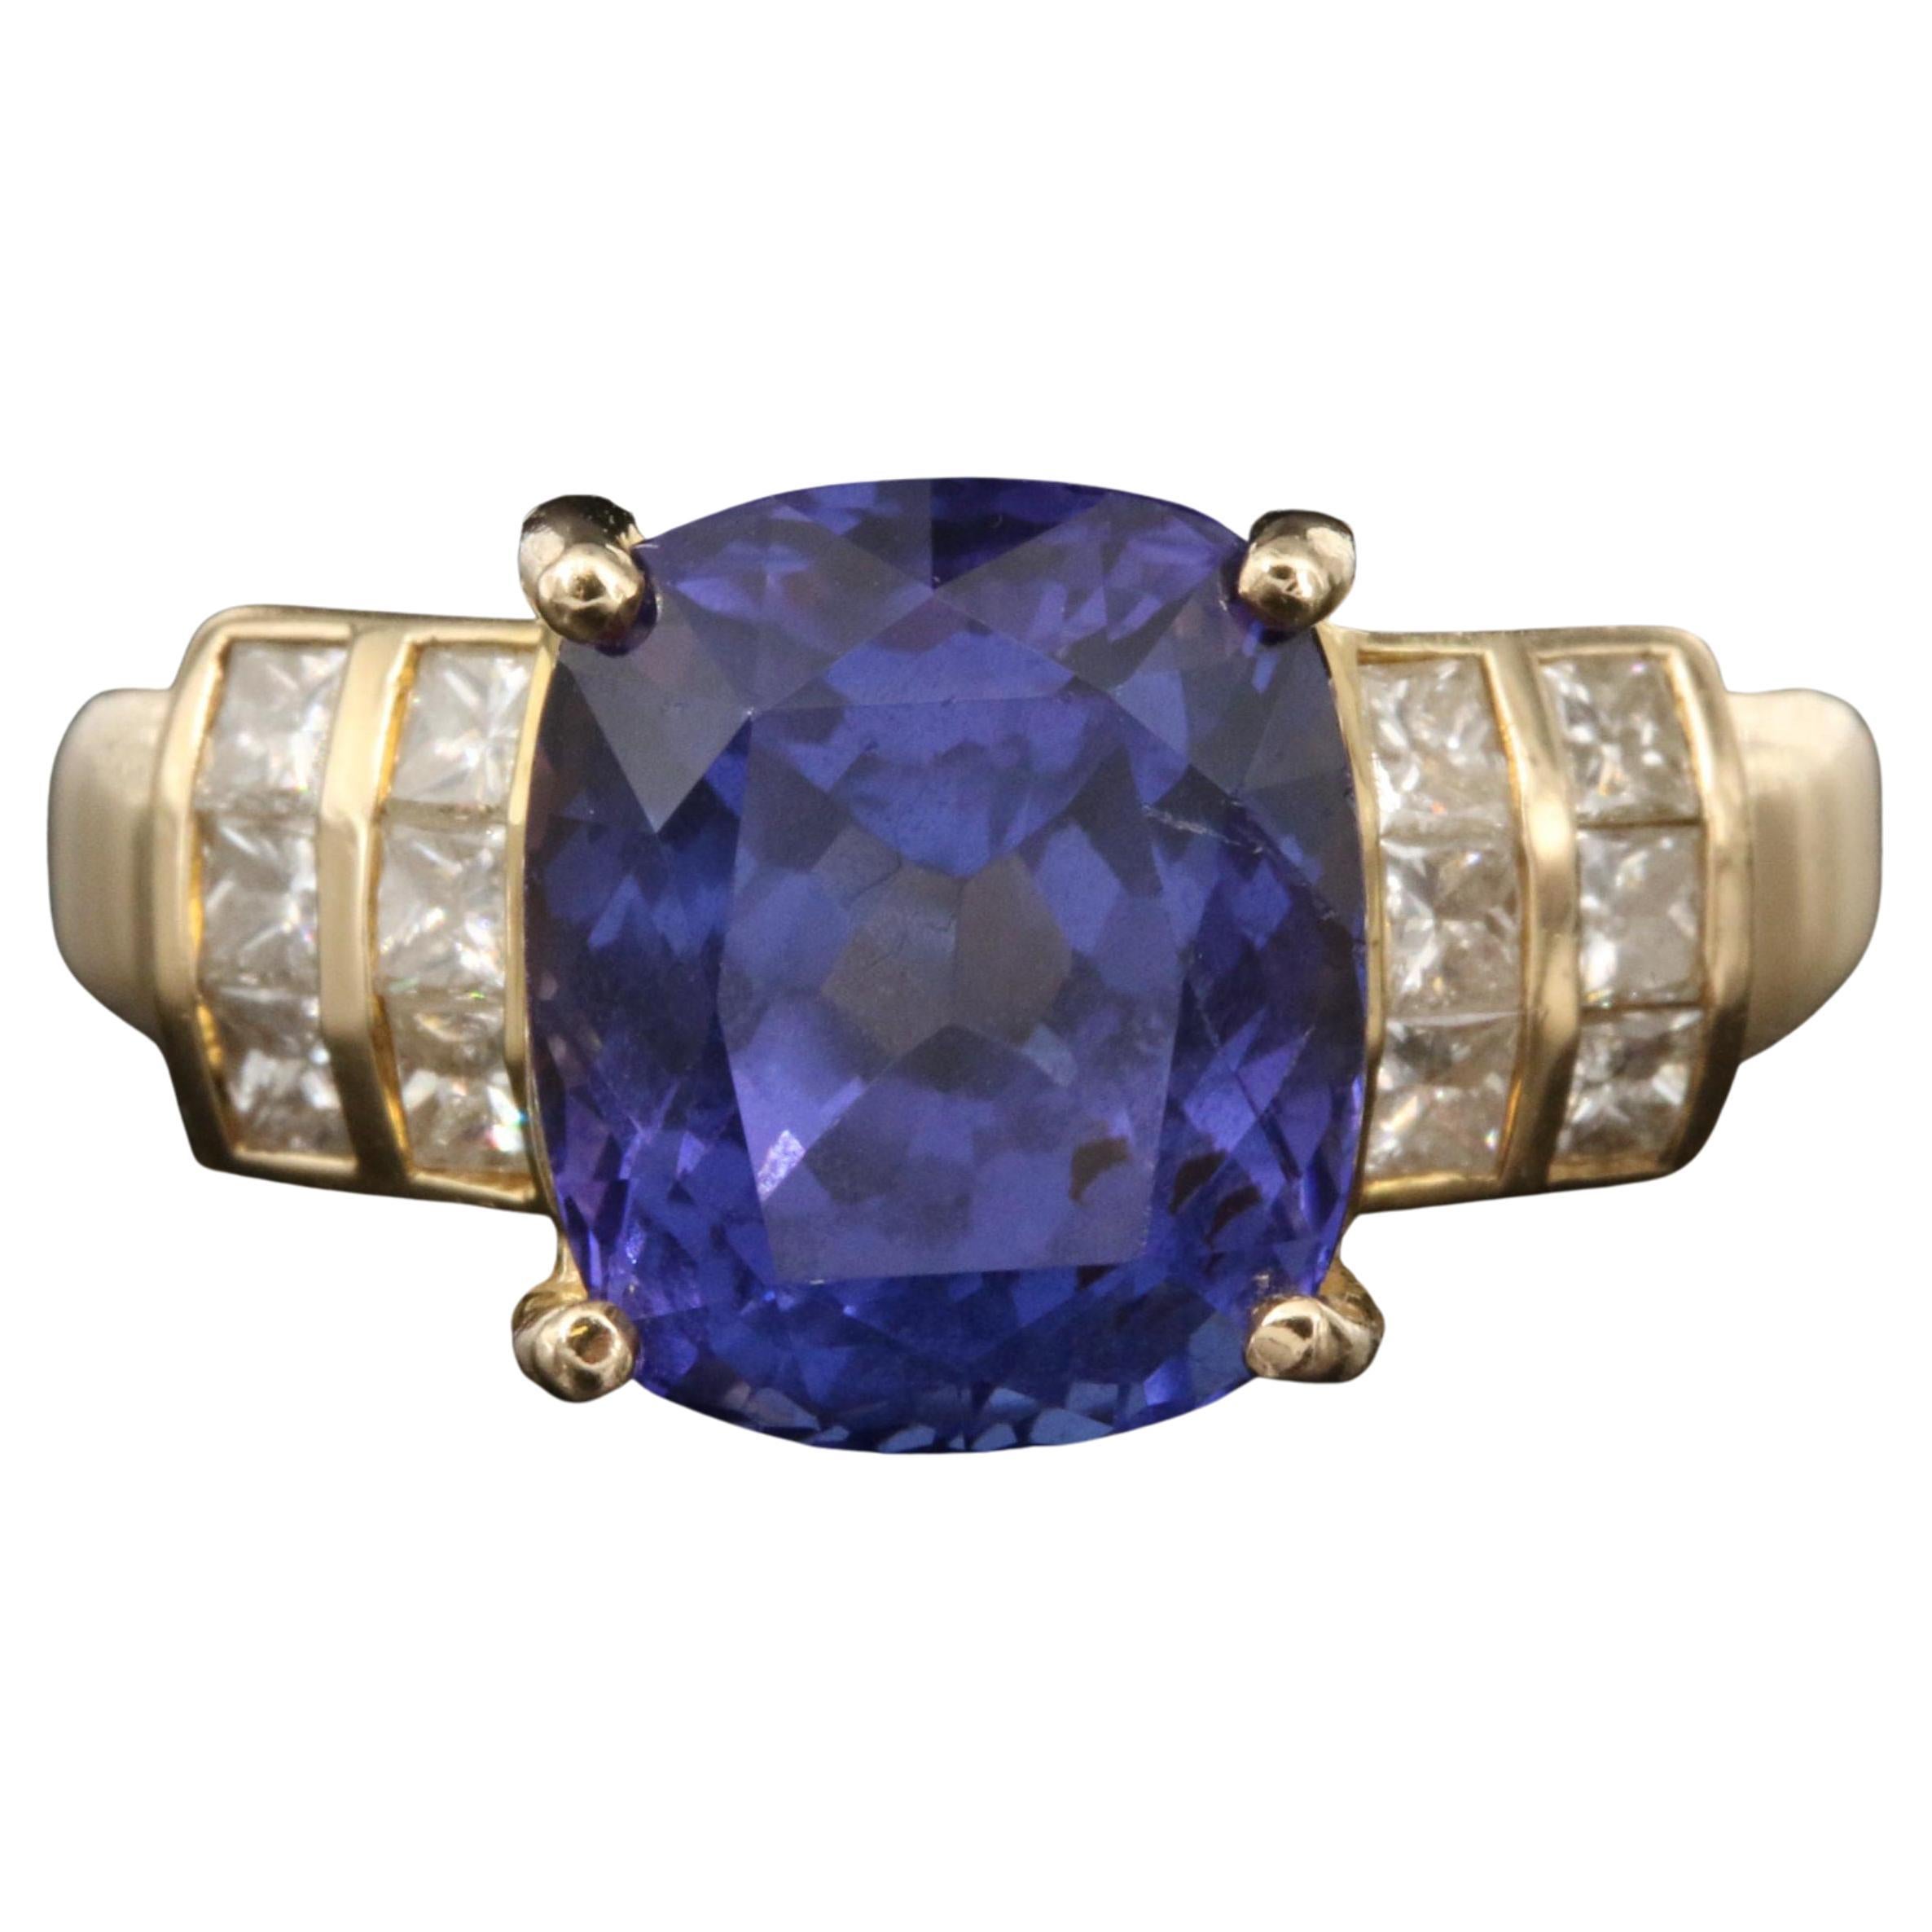 For Sale:  5 Carat Cushion Cut Tanzanite Engagement Ring, Yellow Gold Diamond Wedding Ring